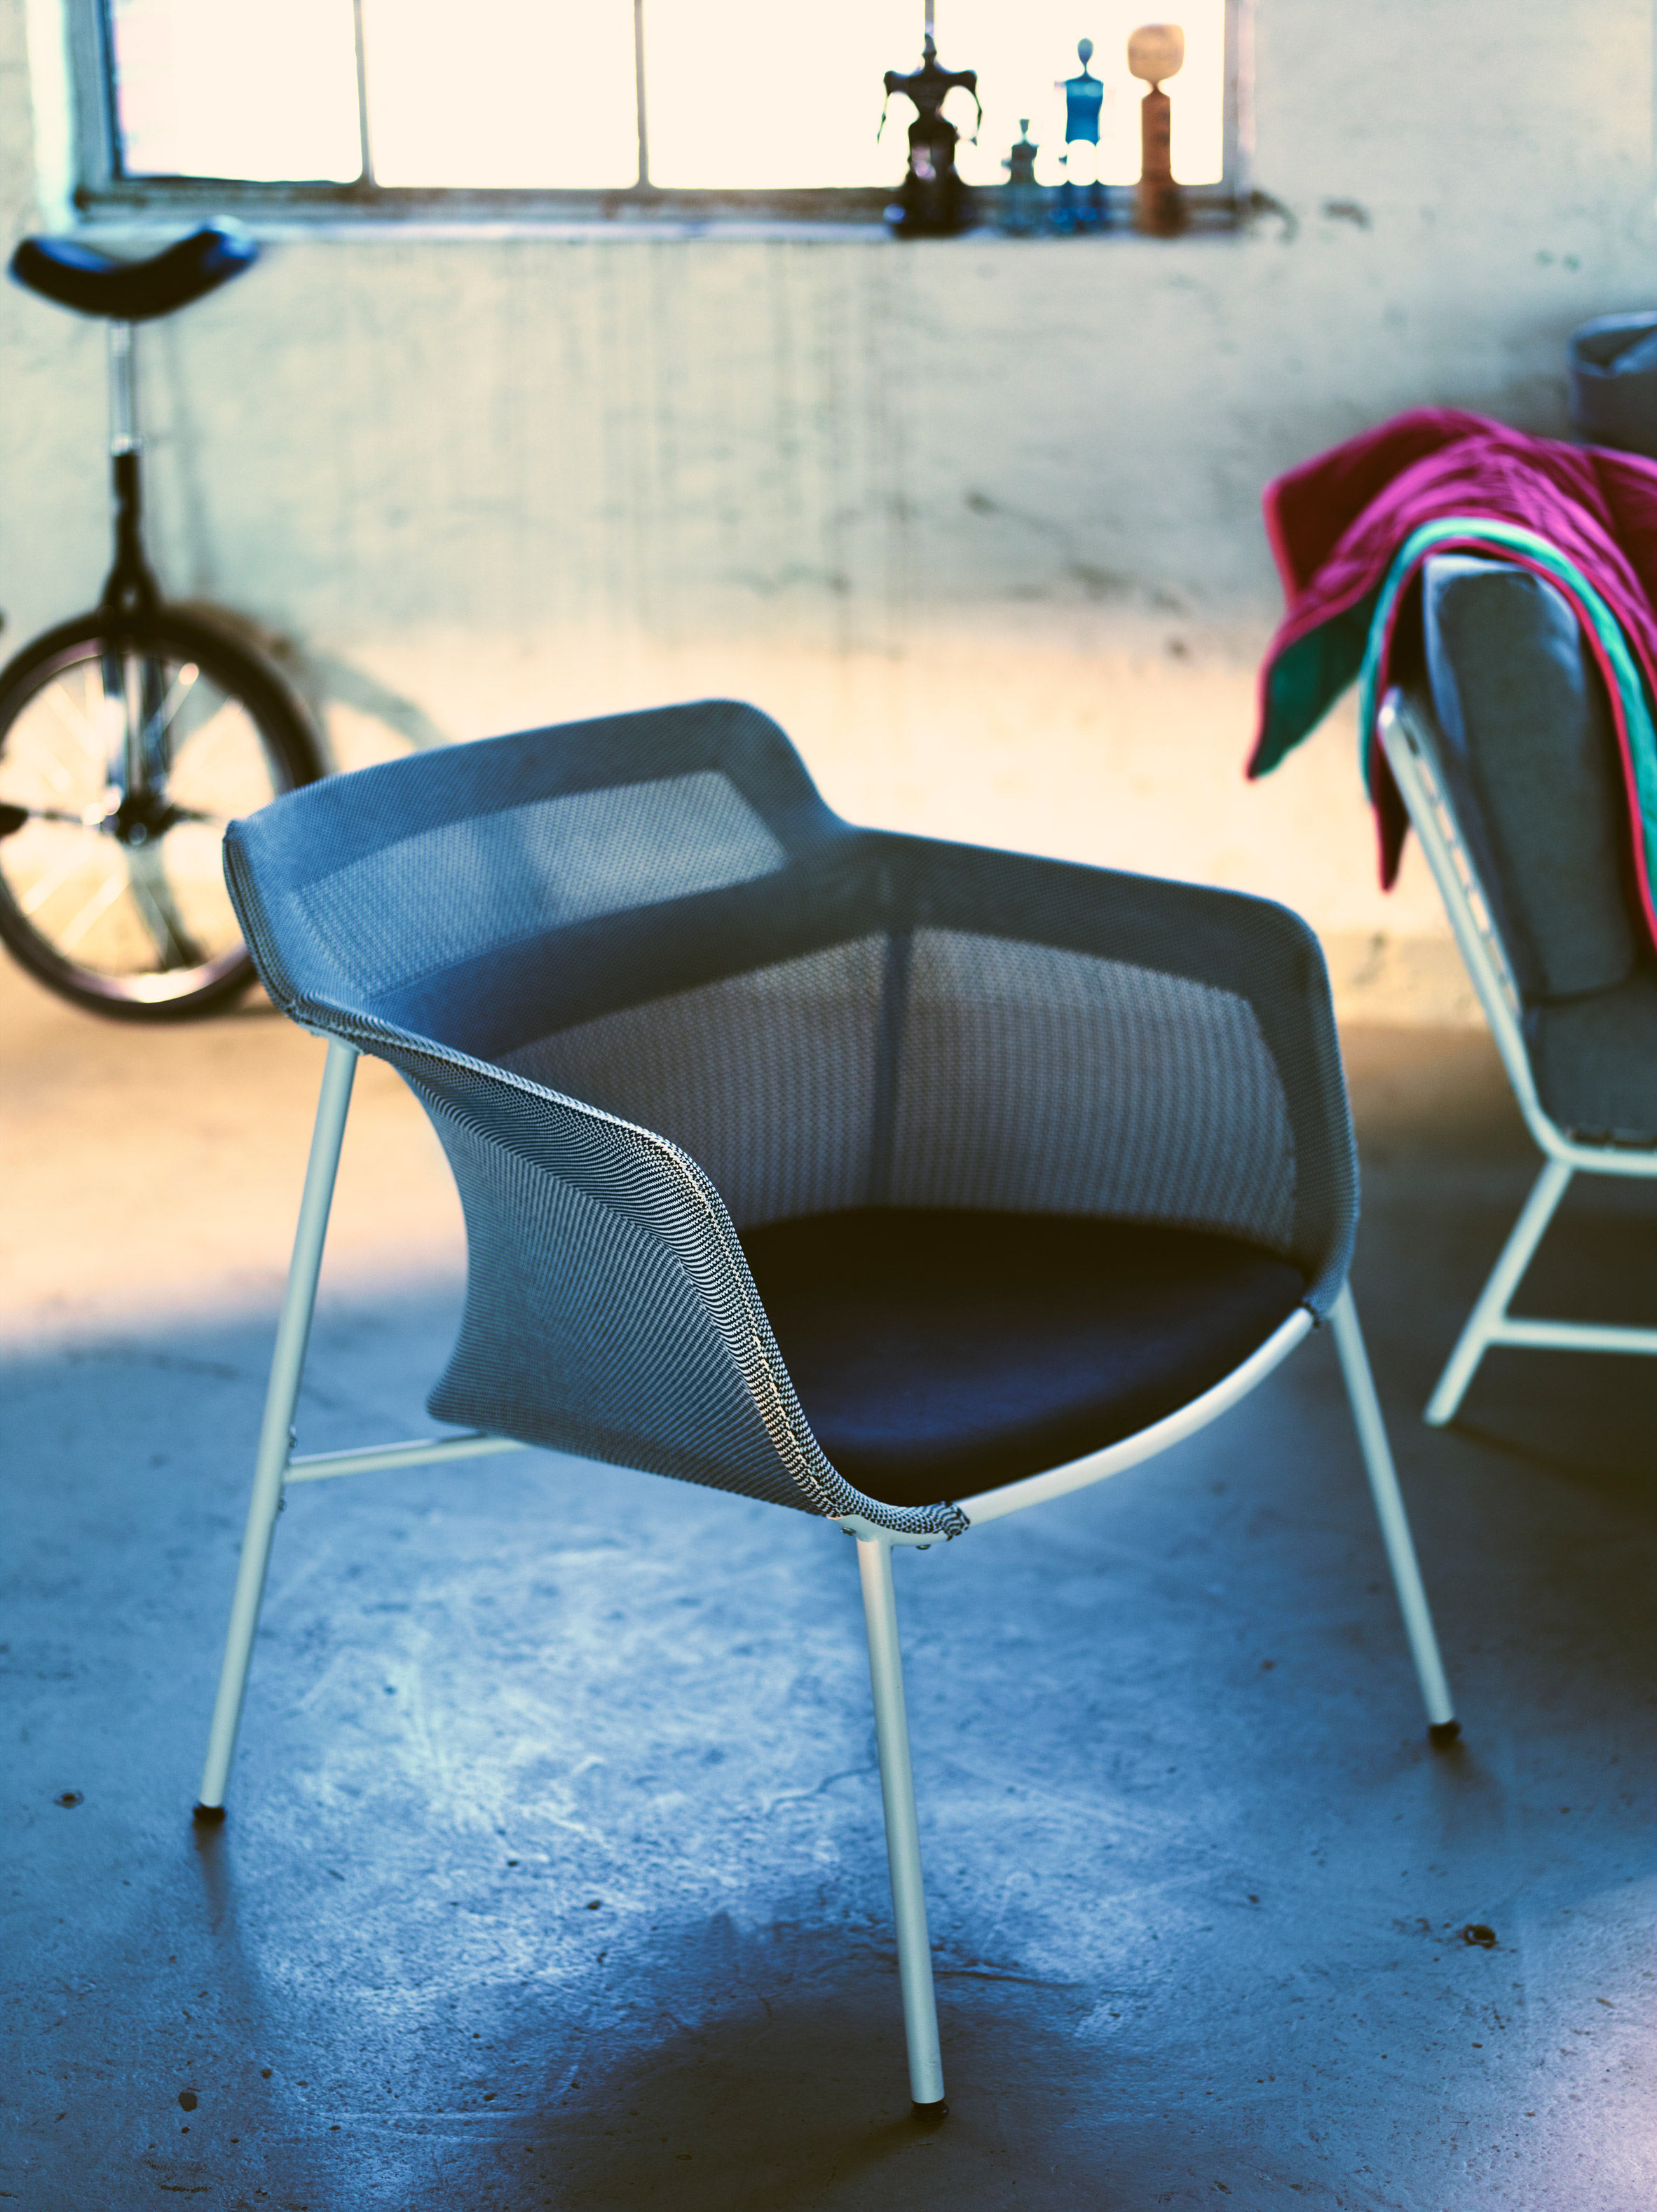 Ikea 3D knitted chair Sarah Fager furniture design